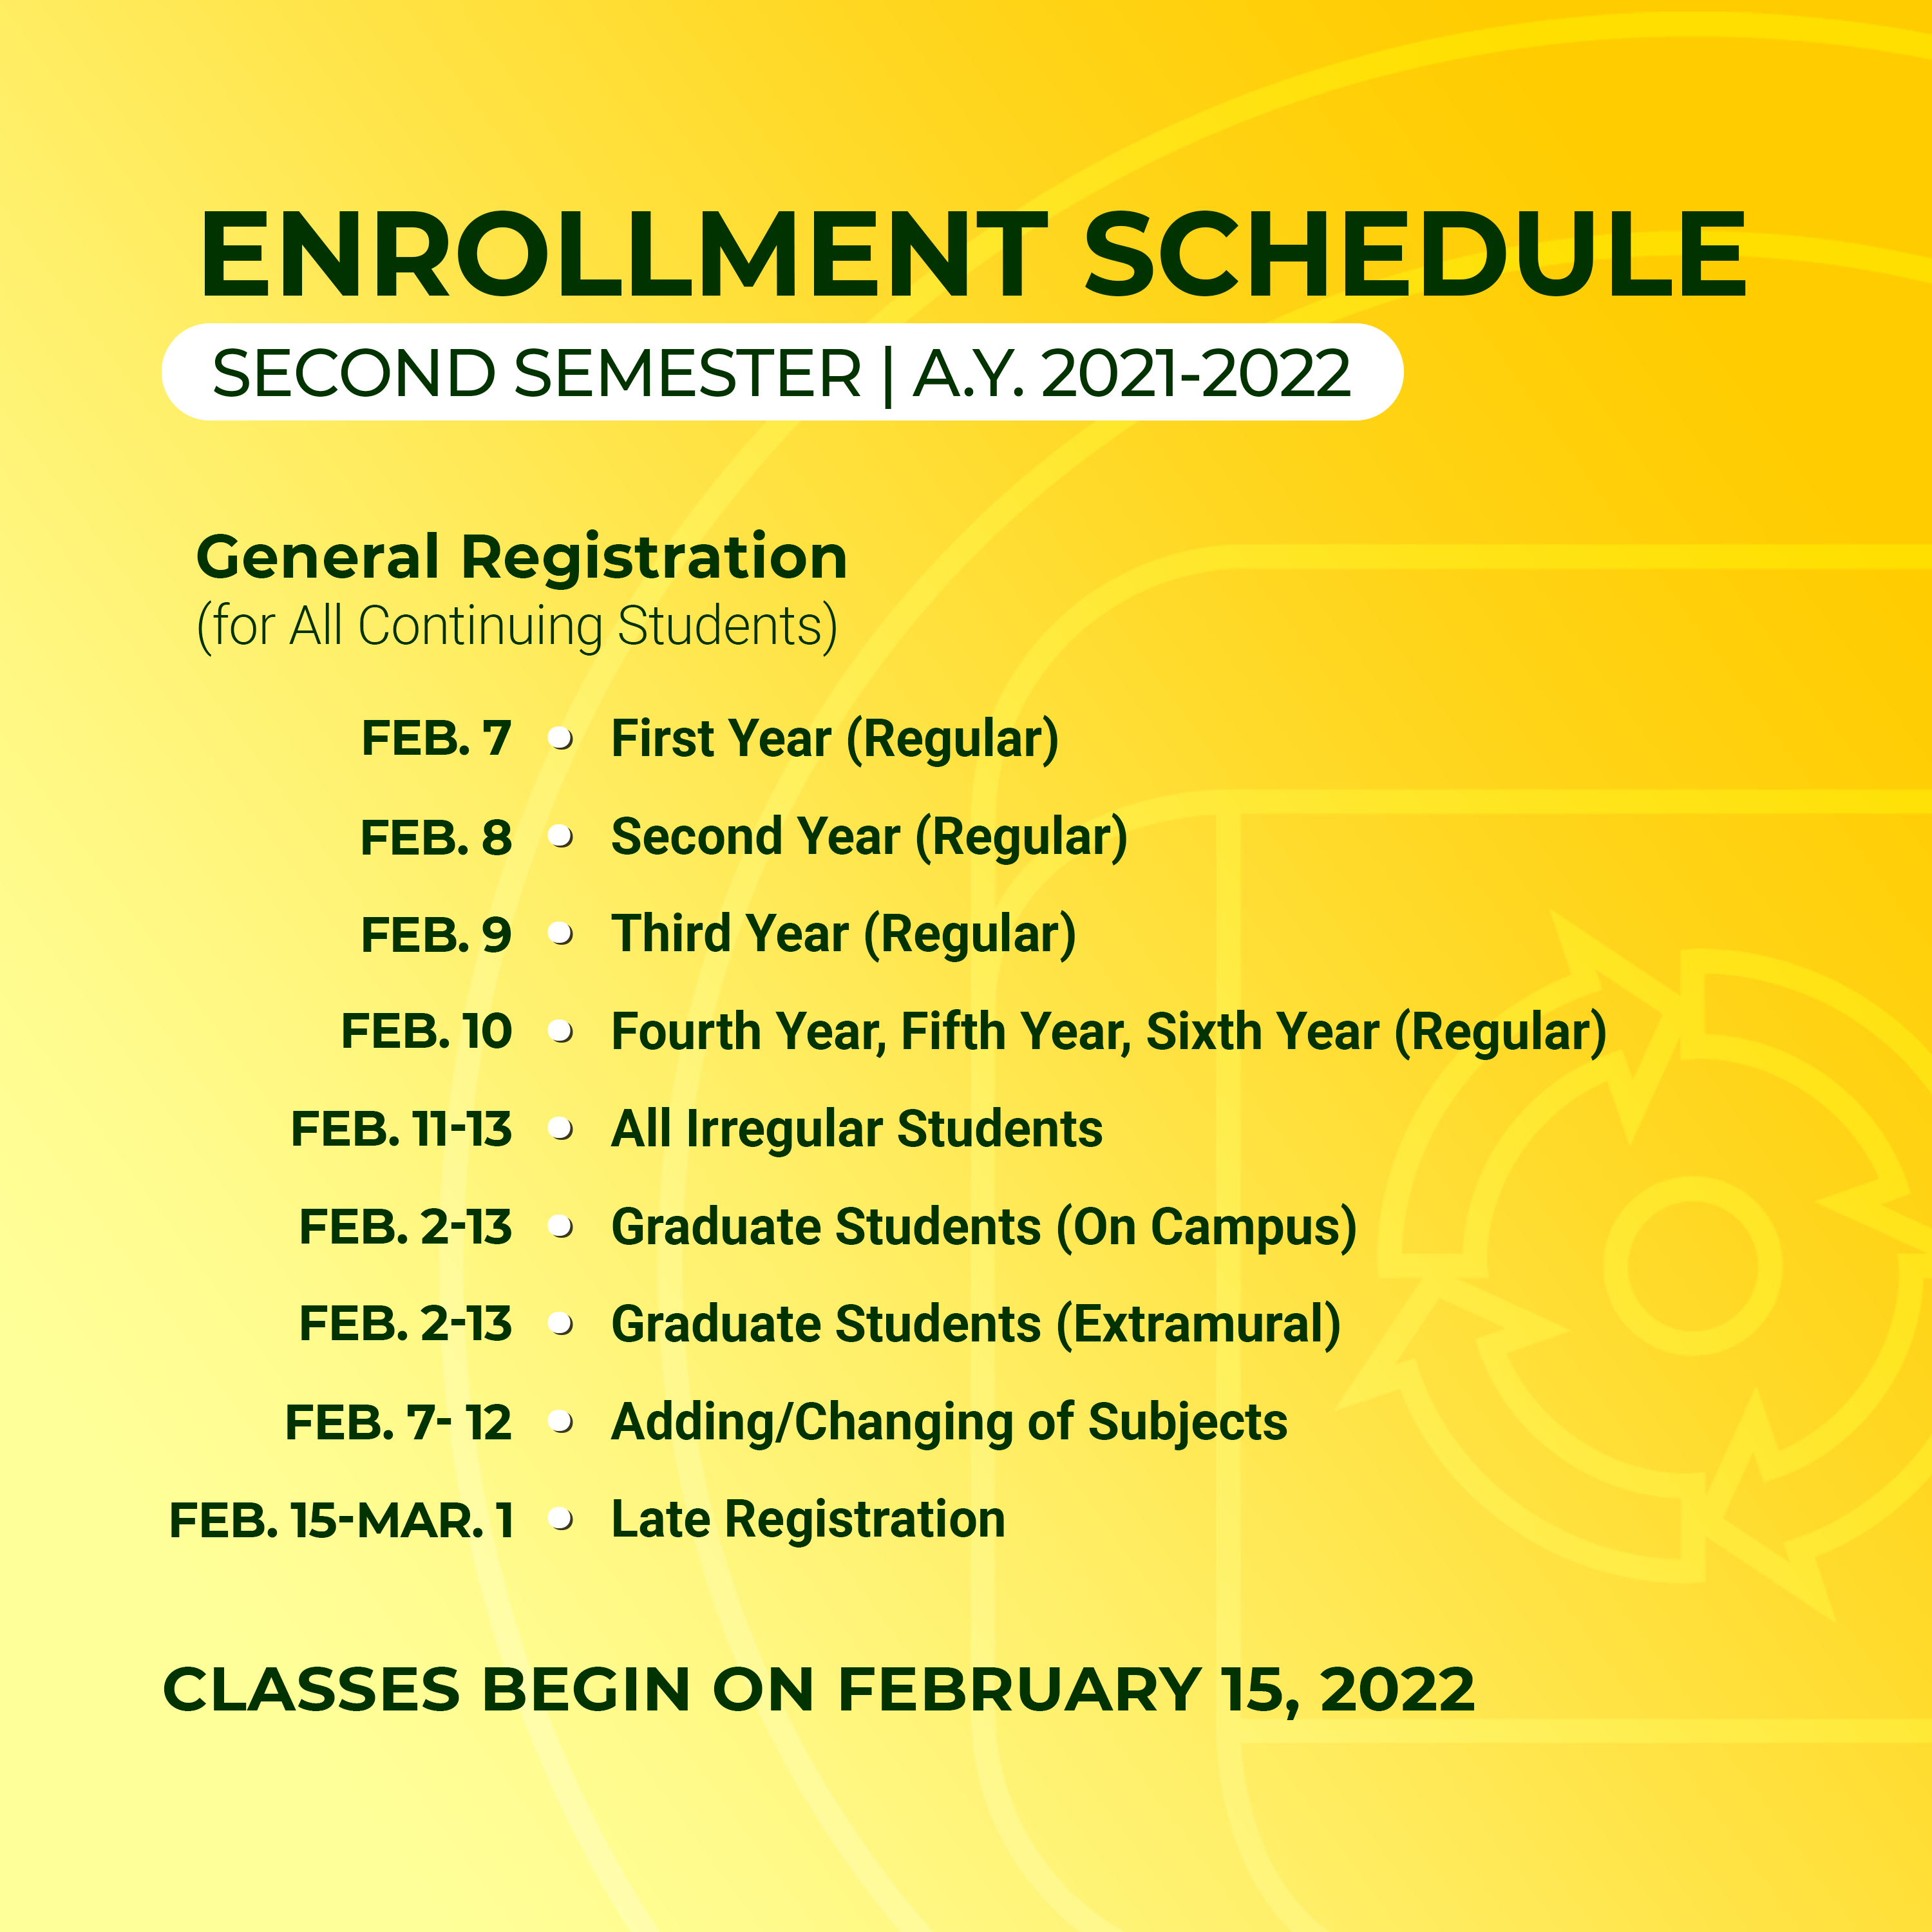 Schedule VSU Enrollment 2021-2022 2nd semester